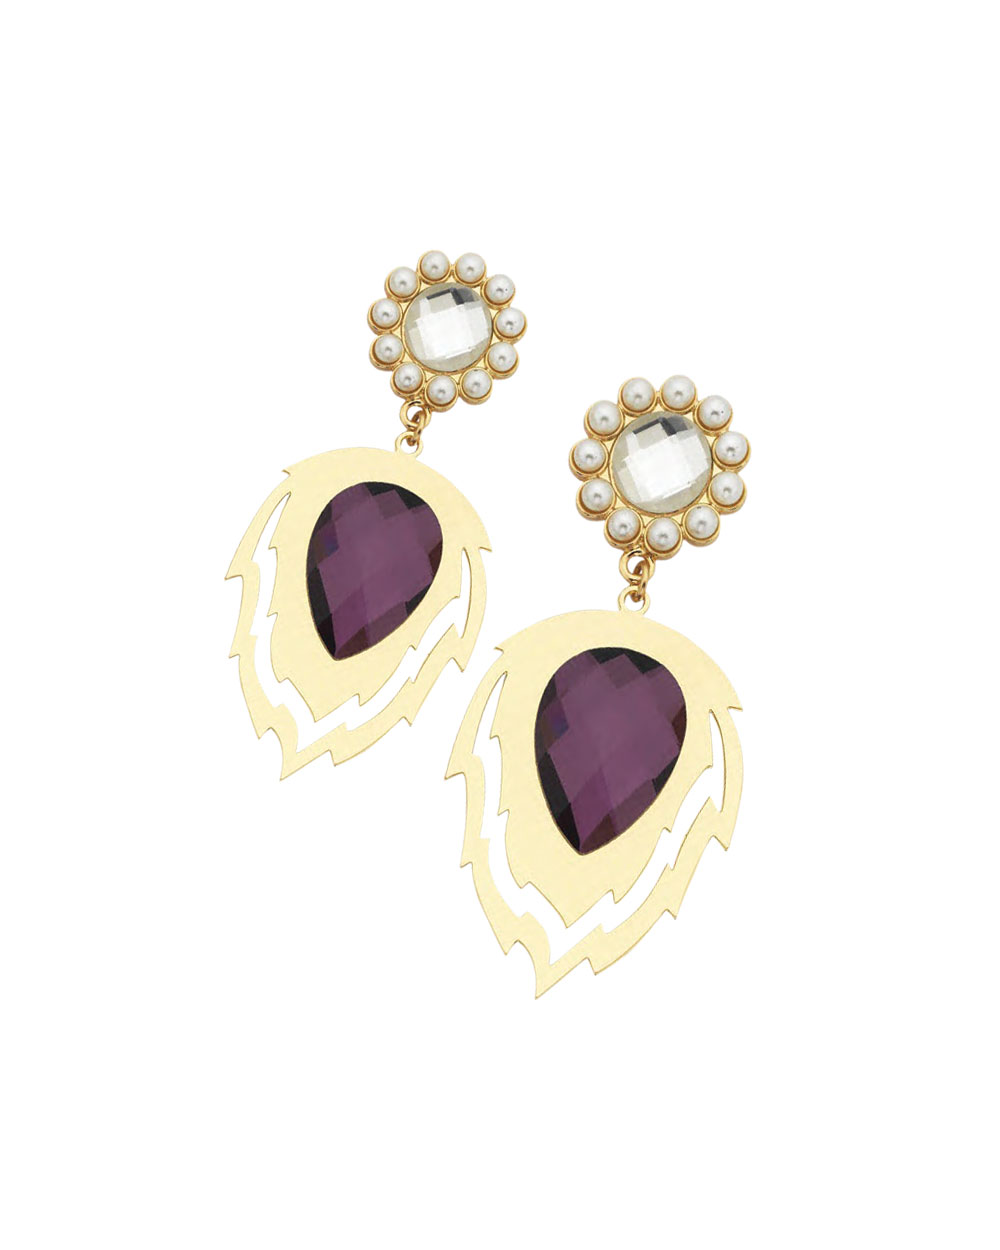 Karen Walker earrings, $45